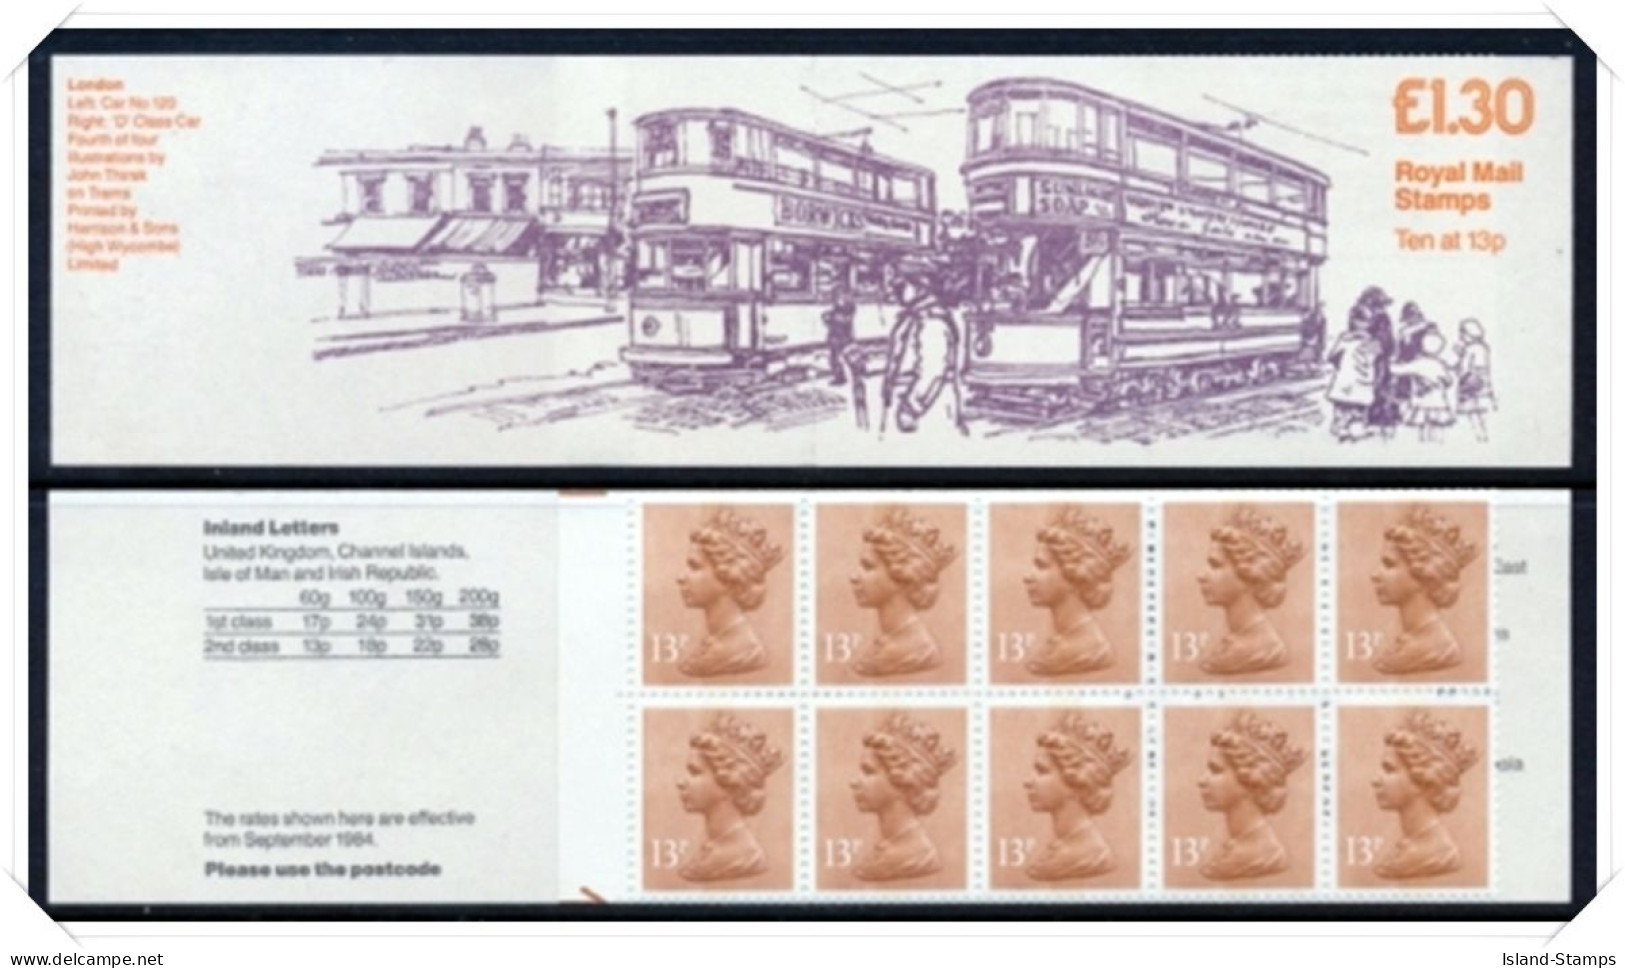 FL6a Trams Series 4 London Left Margin Plain (£1.30 Folded Booklets) NB1-4 - Booklets